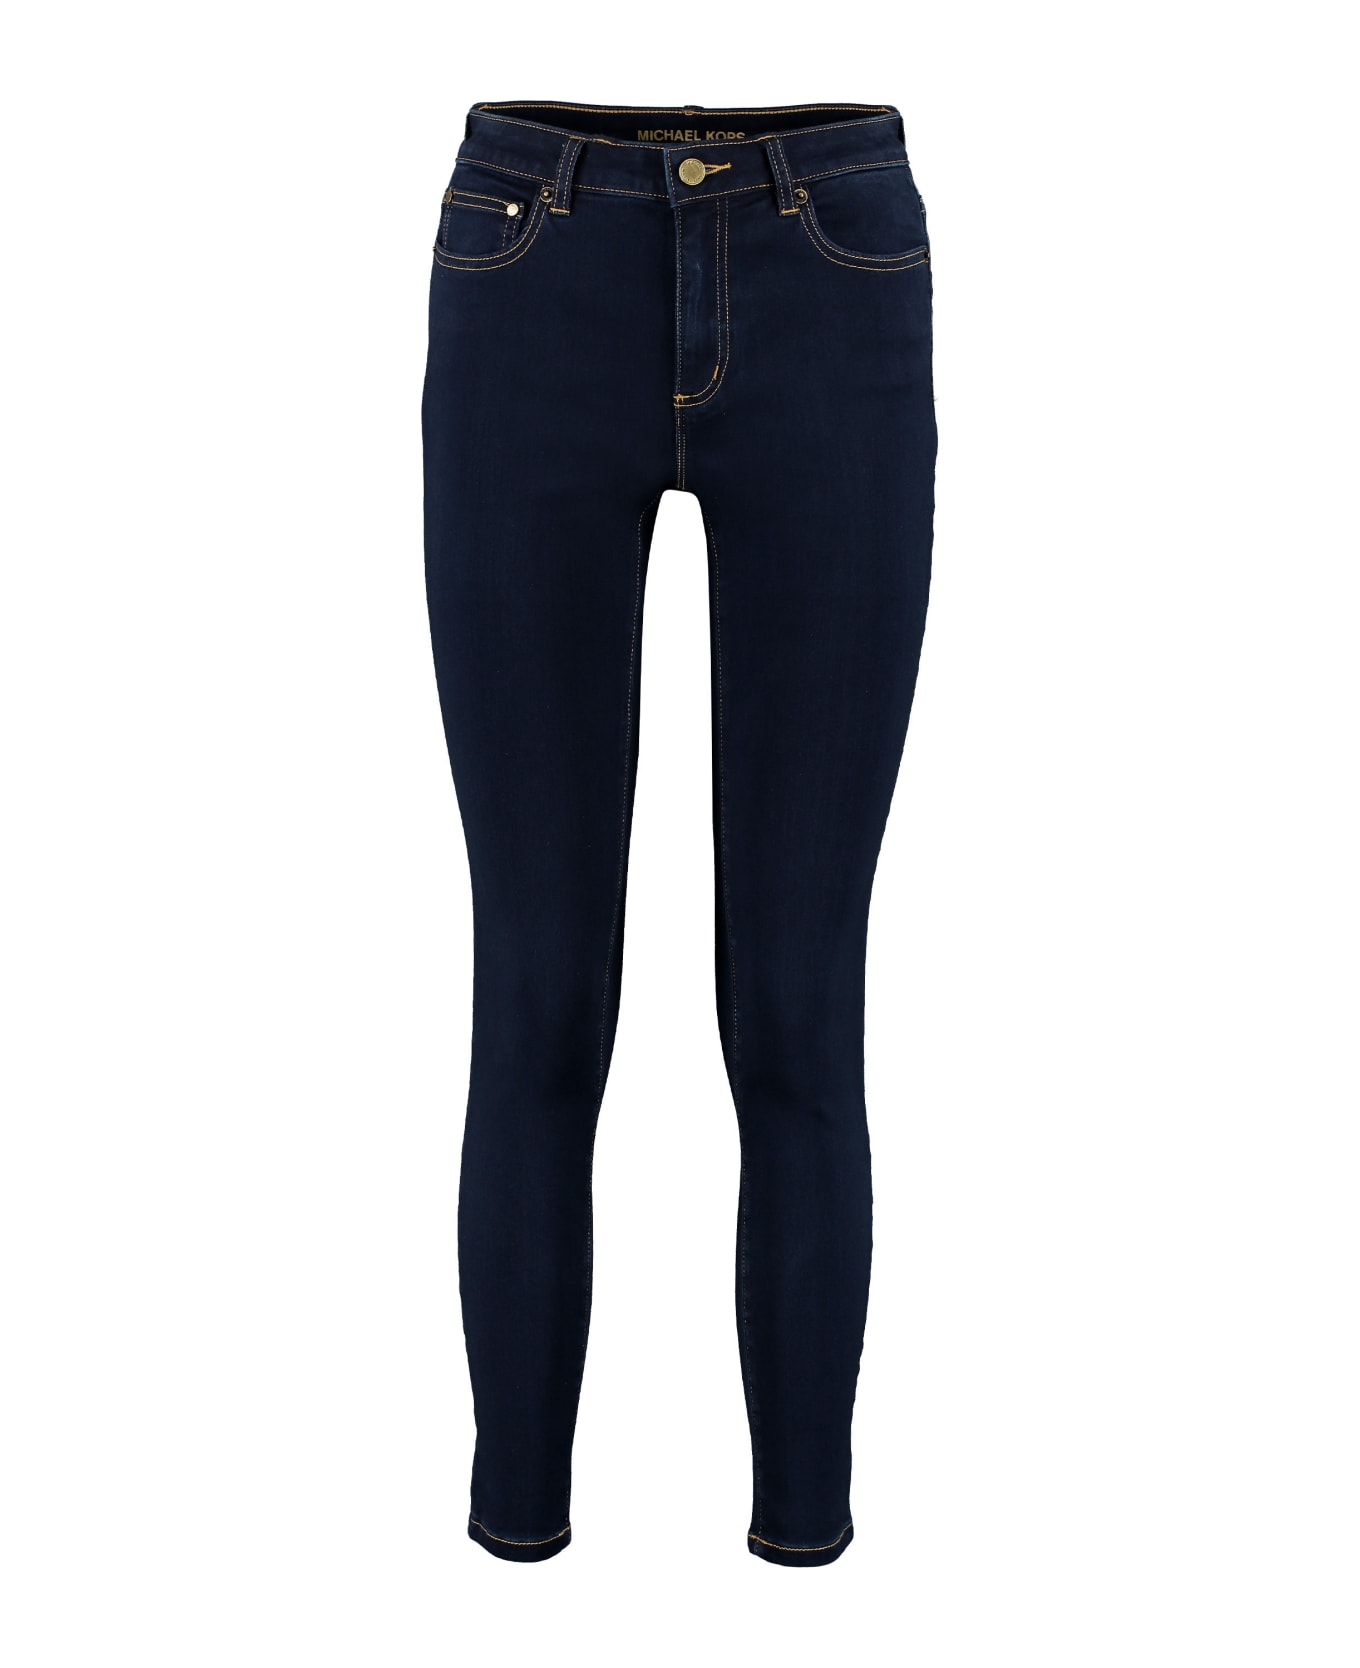 Michael Kors 5-pocket Skinny Jeans - Twilight Wsh